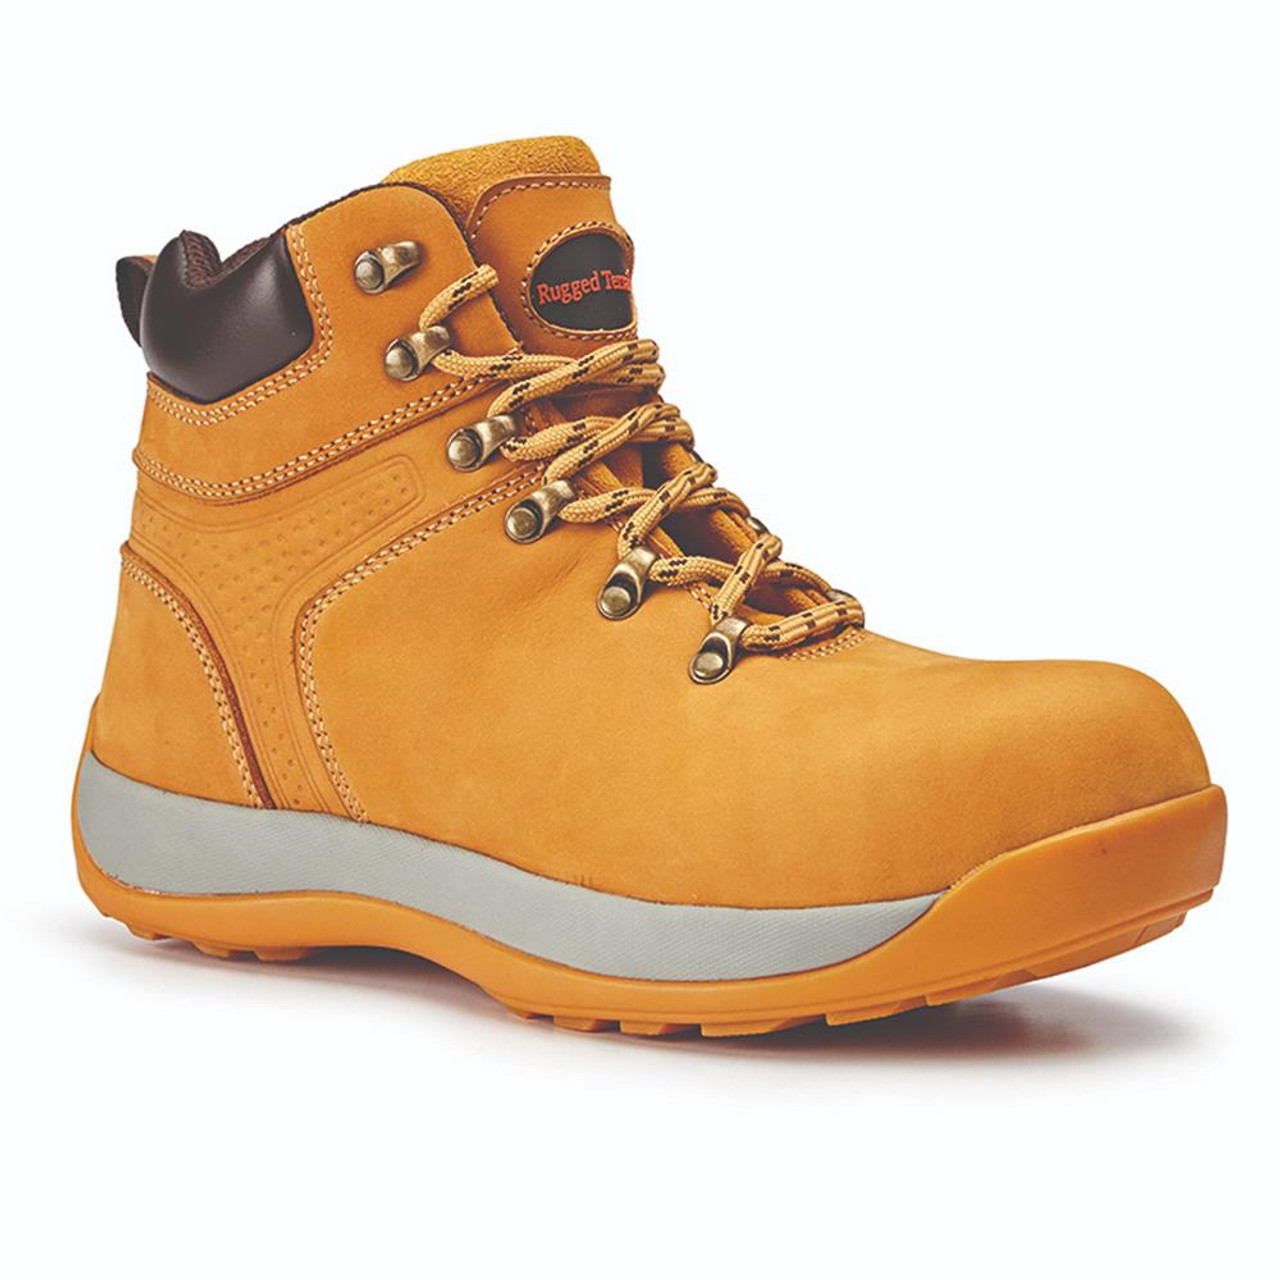 Rugged Terrain Nubuck Hiker Boot - Honey | ITS.co.uk|